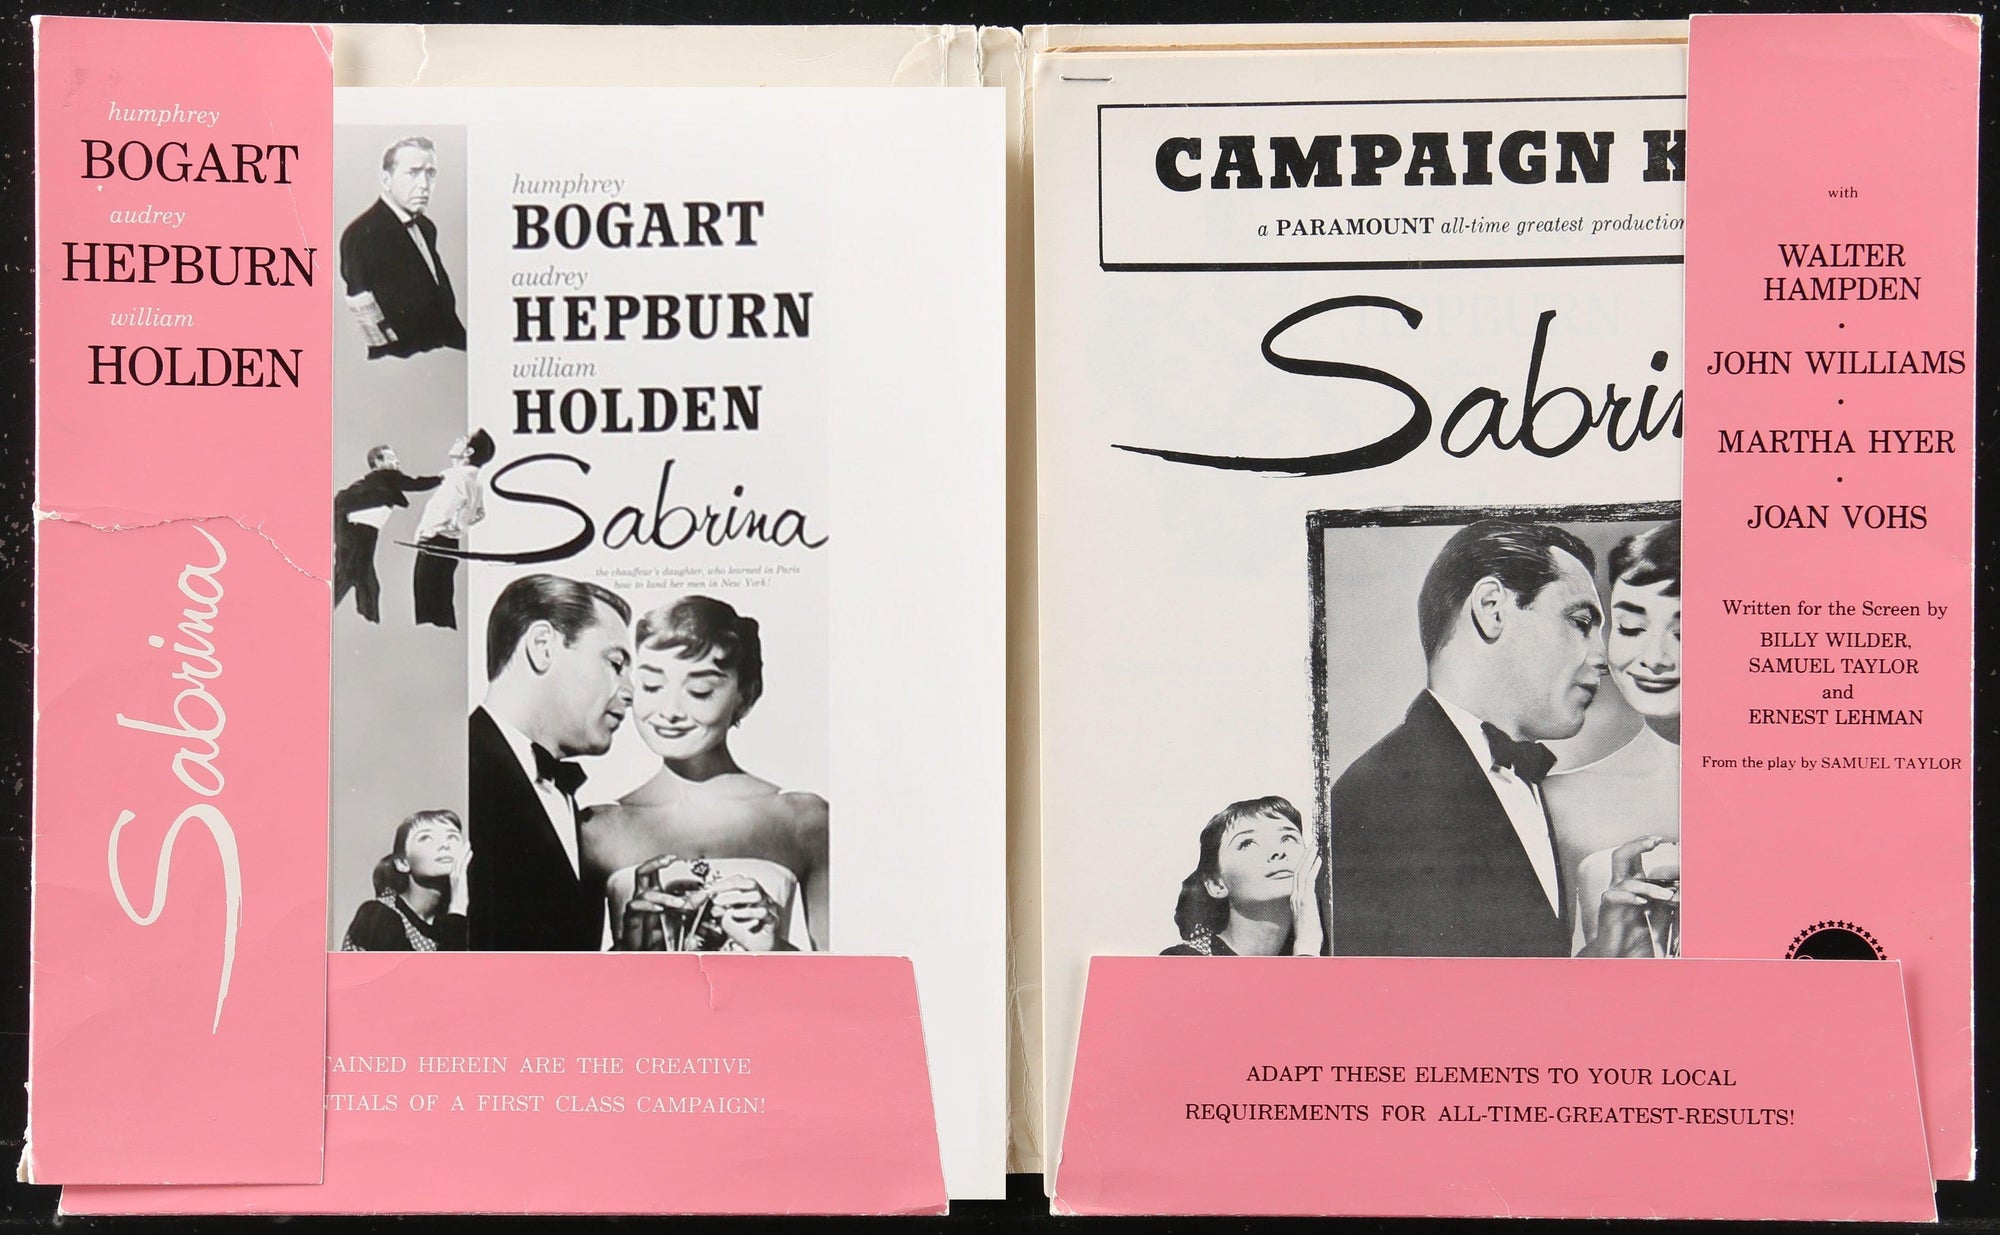 Sabrina Presskit Original Vintage Movie Poster